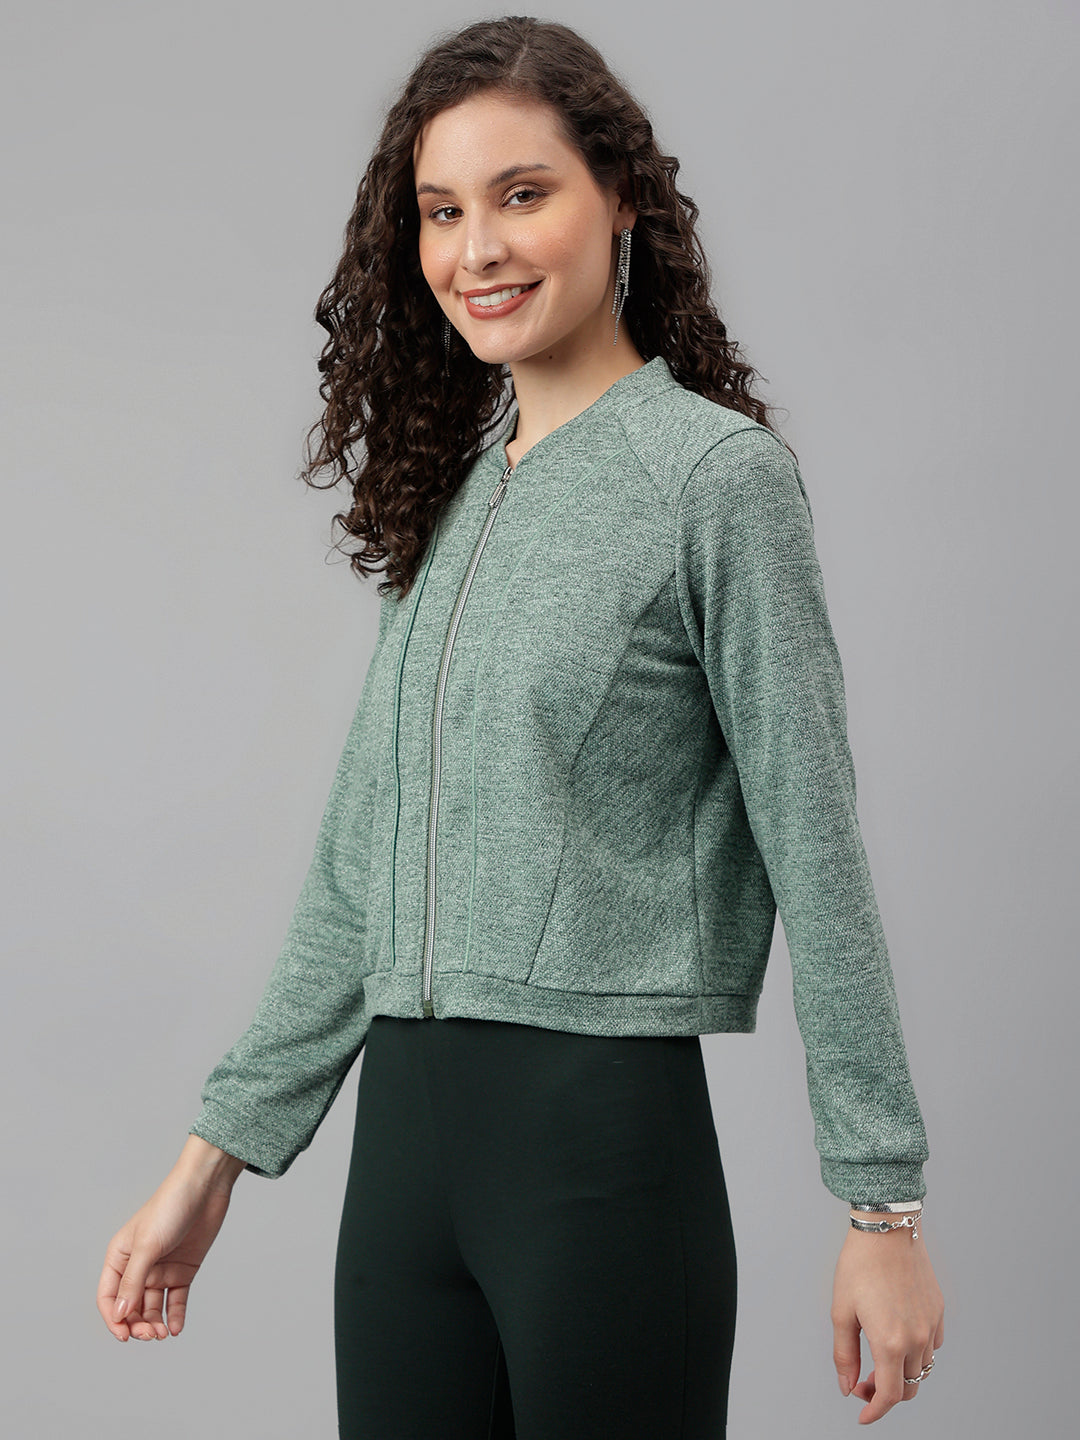 Green Full Sleeve Solid Sweatshirt Knit Top